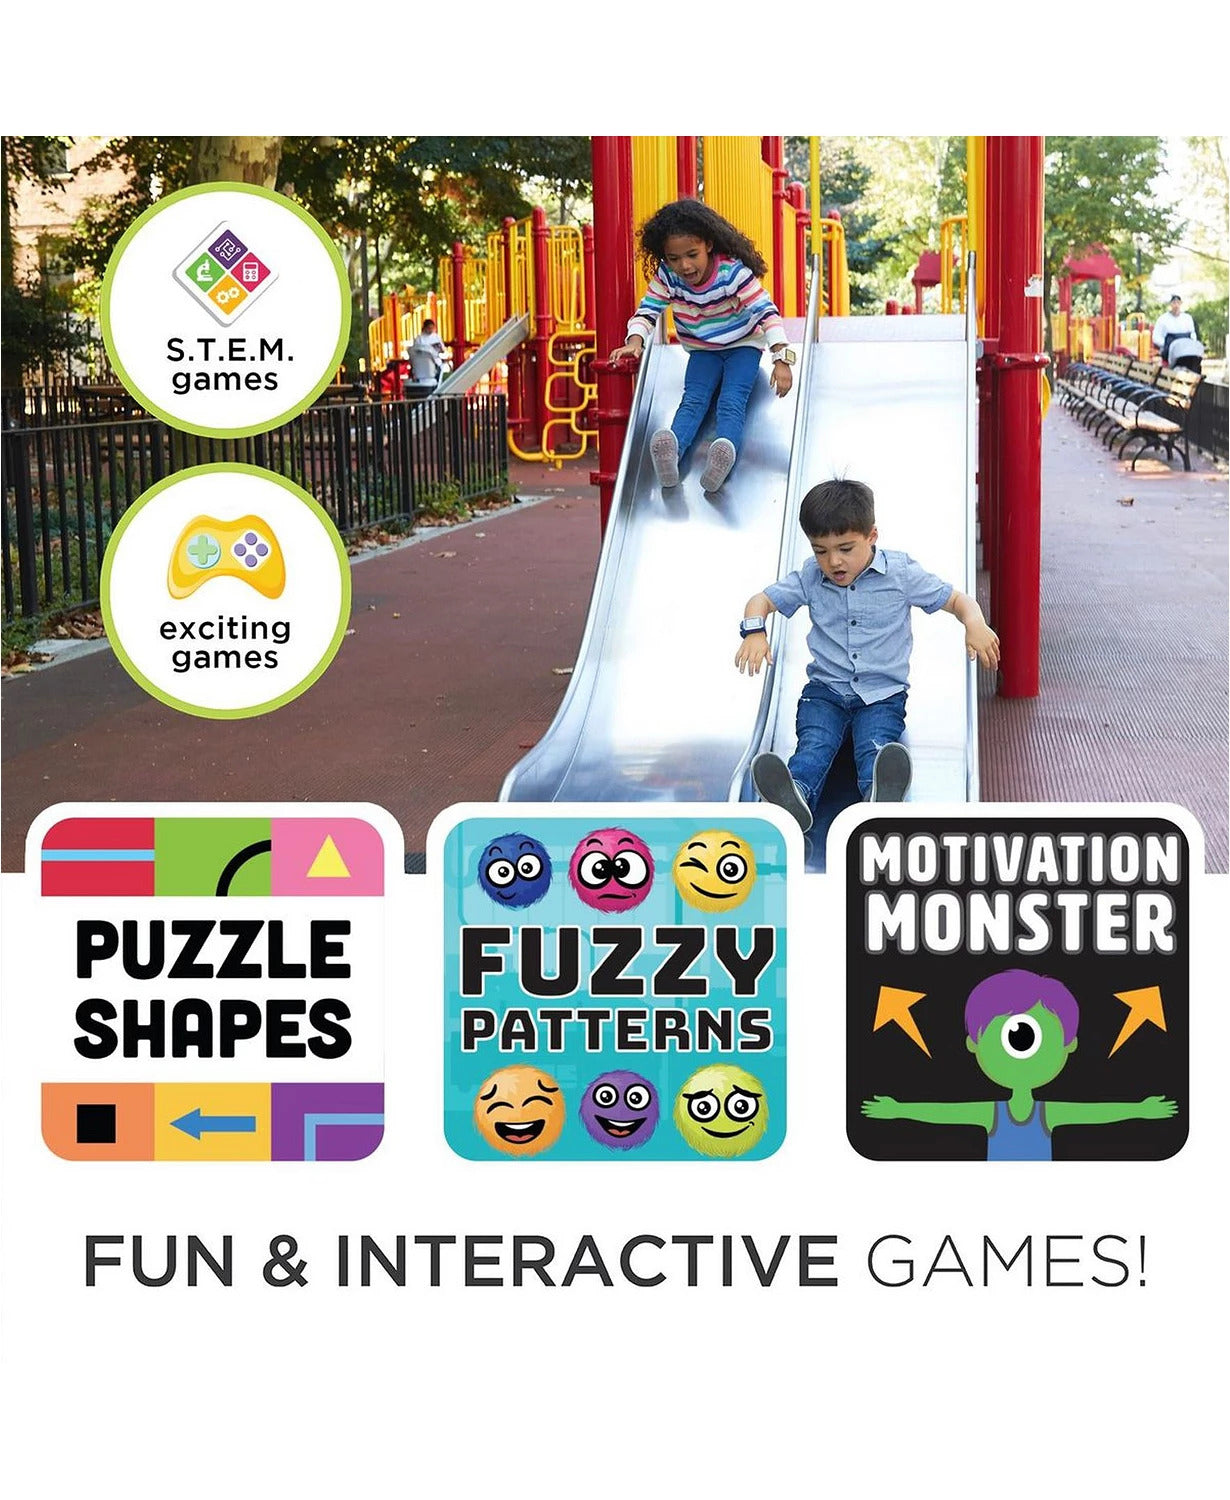 PlayZoom 2 Kids Smartwatch: Blush Hello! Panda Print